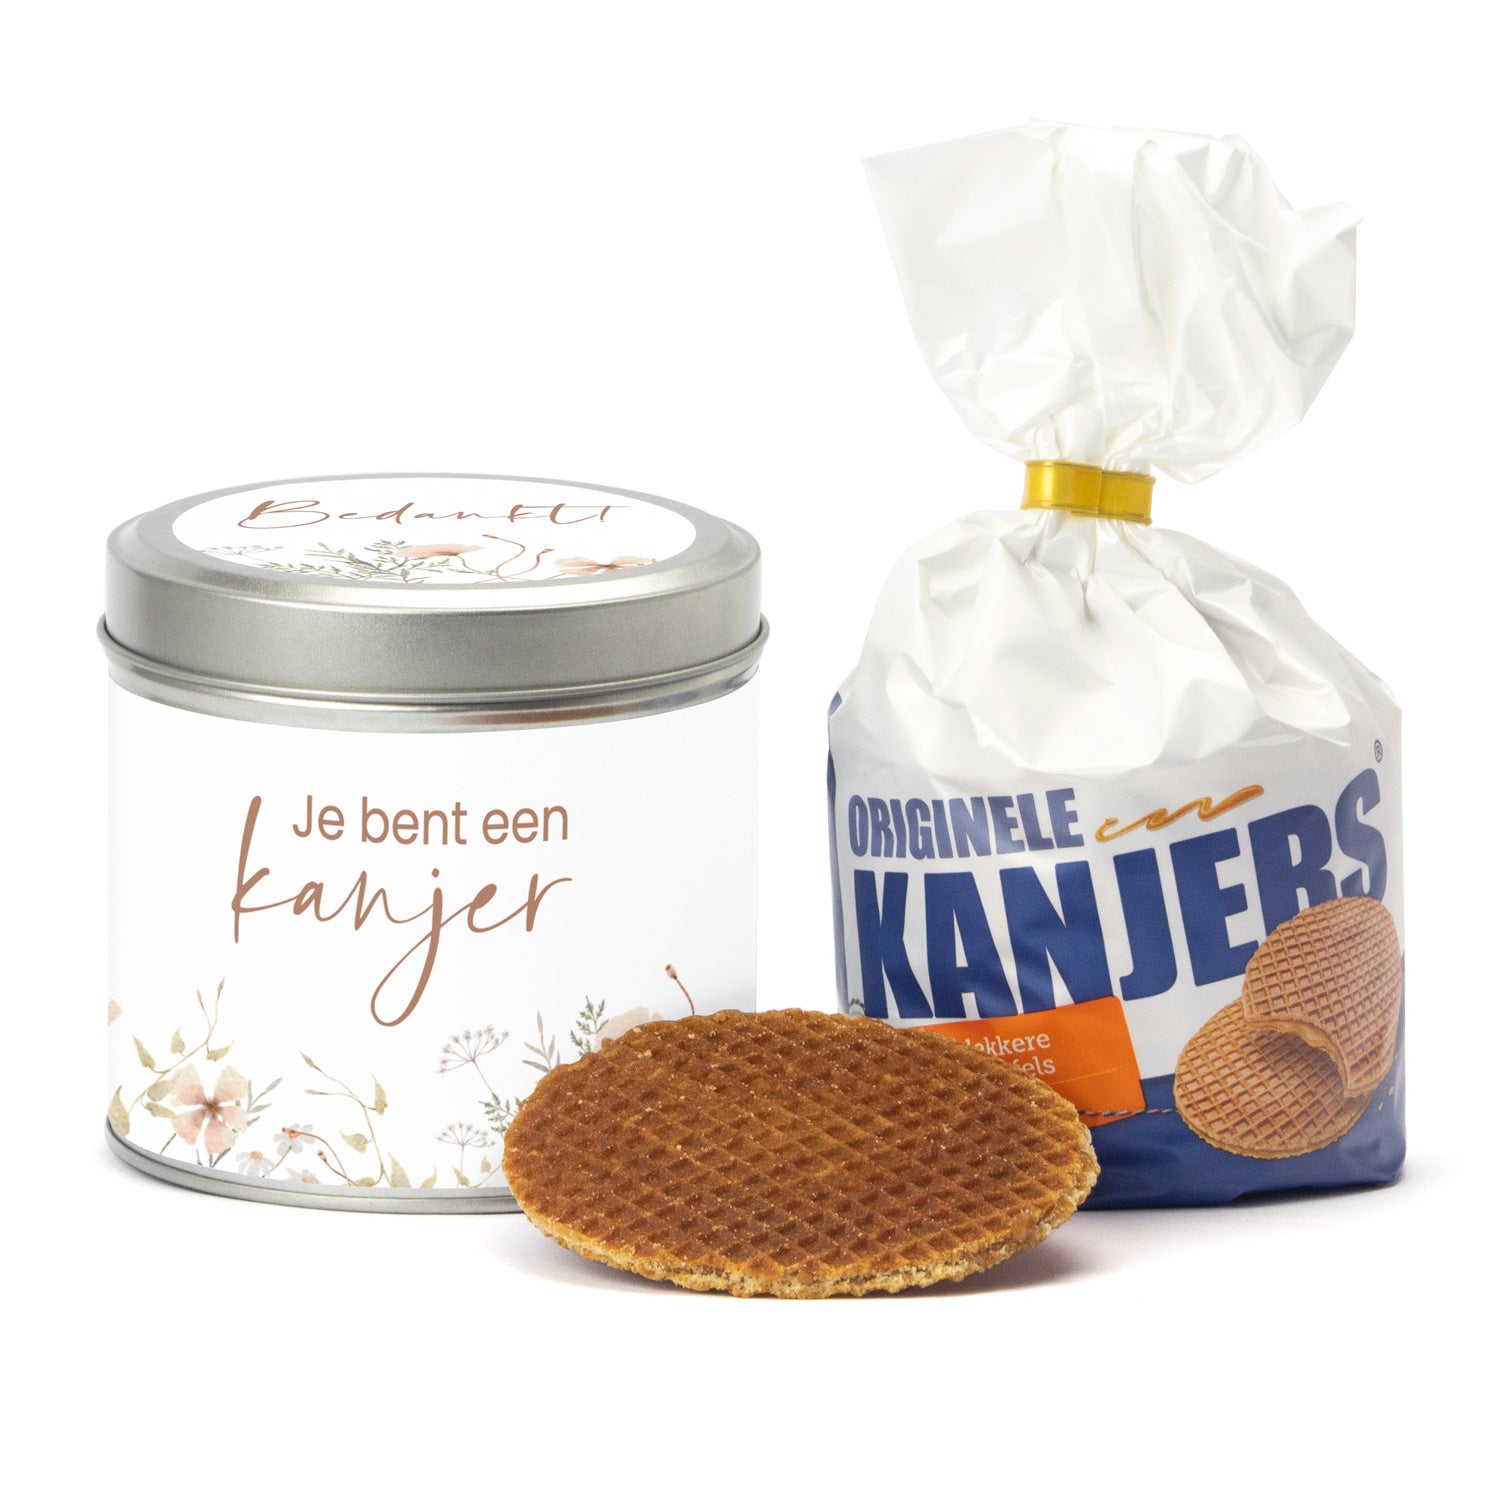 Blik Kanjers Stroopwafels met logo - Verpleging - Bedankjes.nl